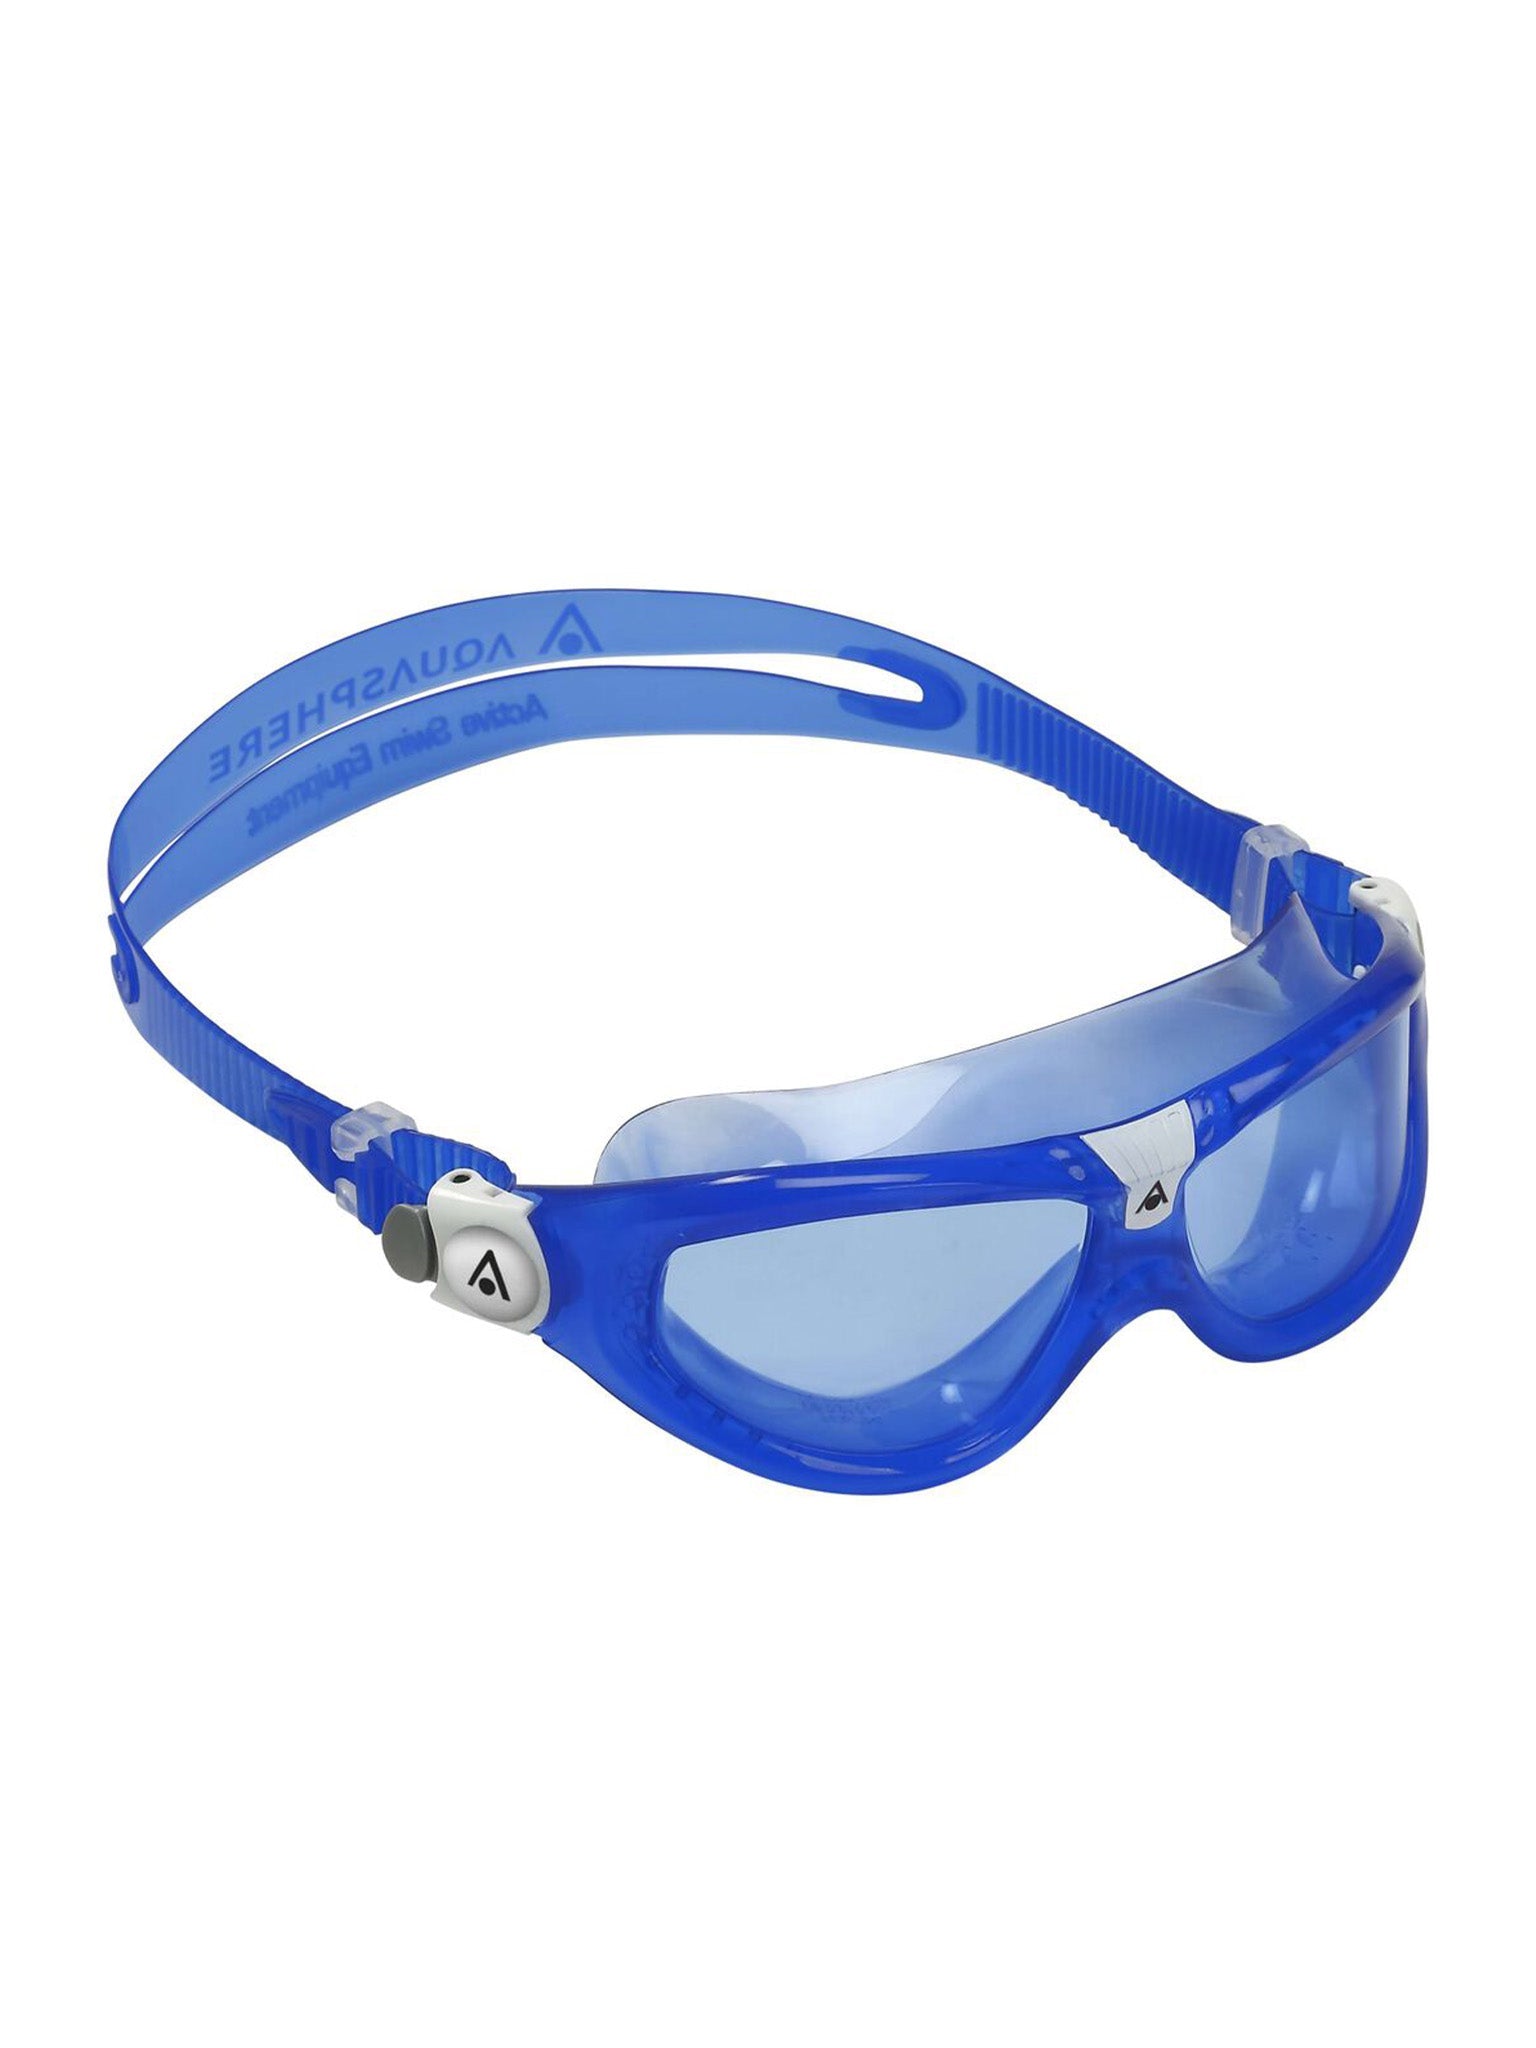 Seal kids 2.0 Swim Goggles - Blue